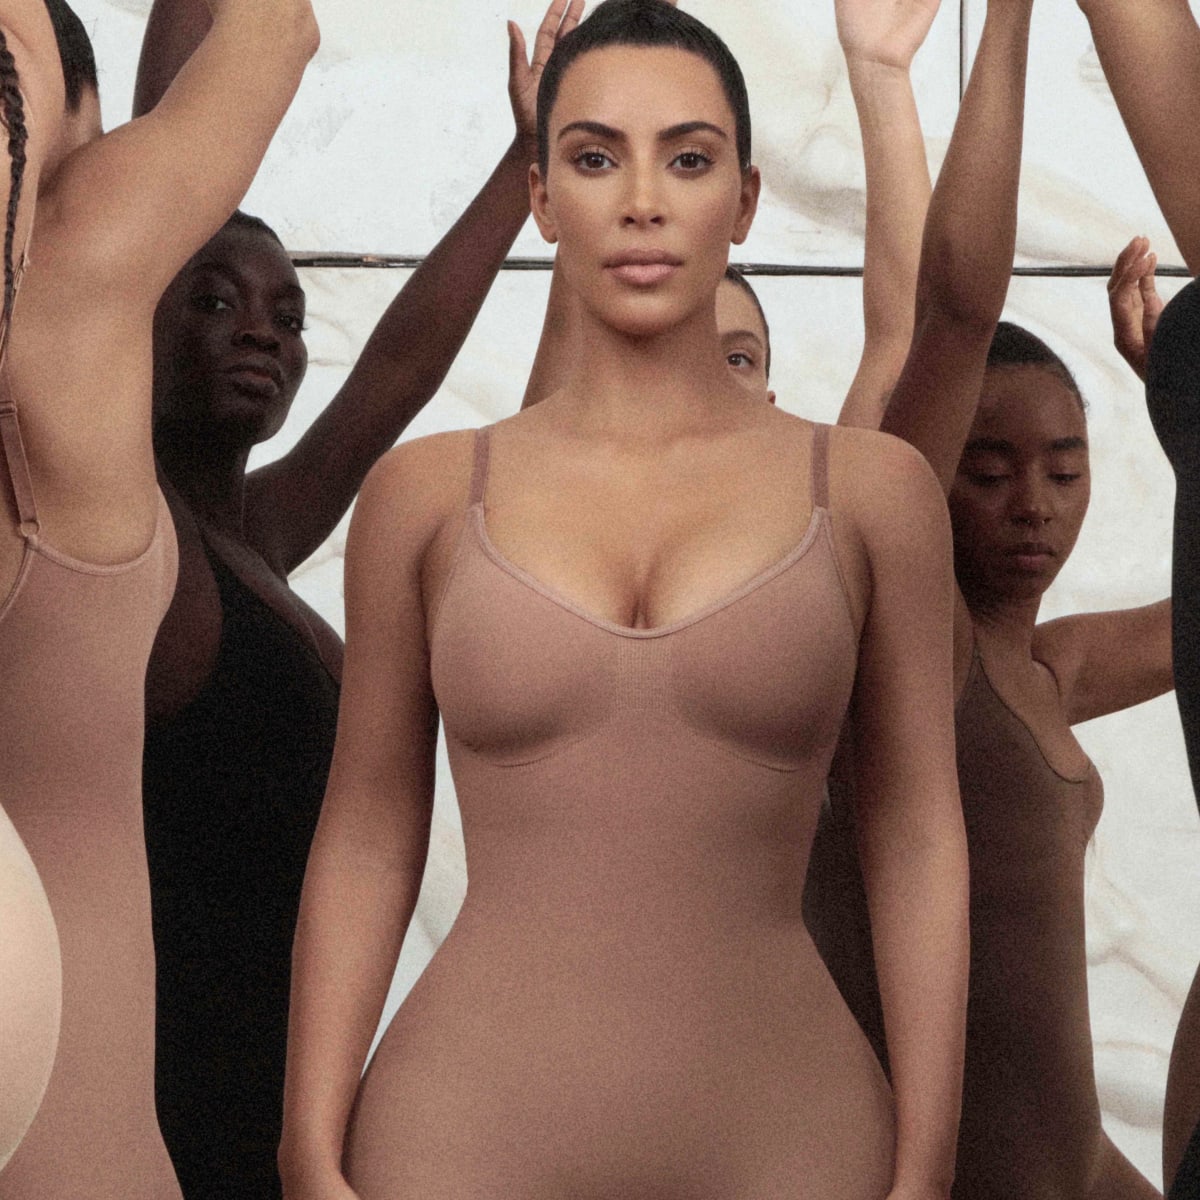 How Kim Kardashian's billion-dollar brand Skims defies the